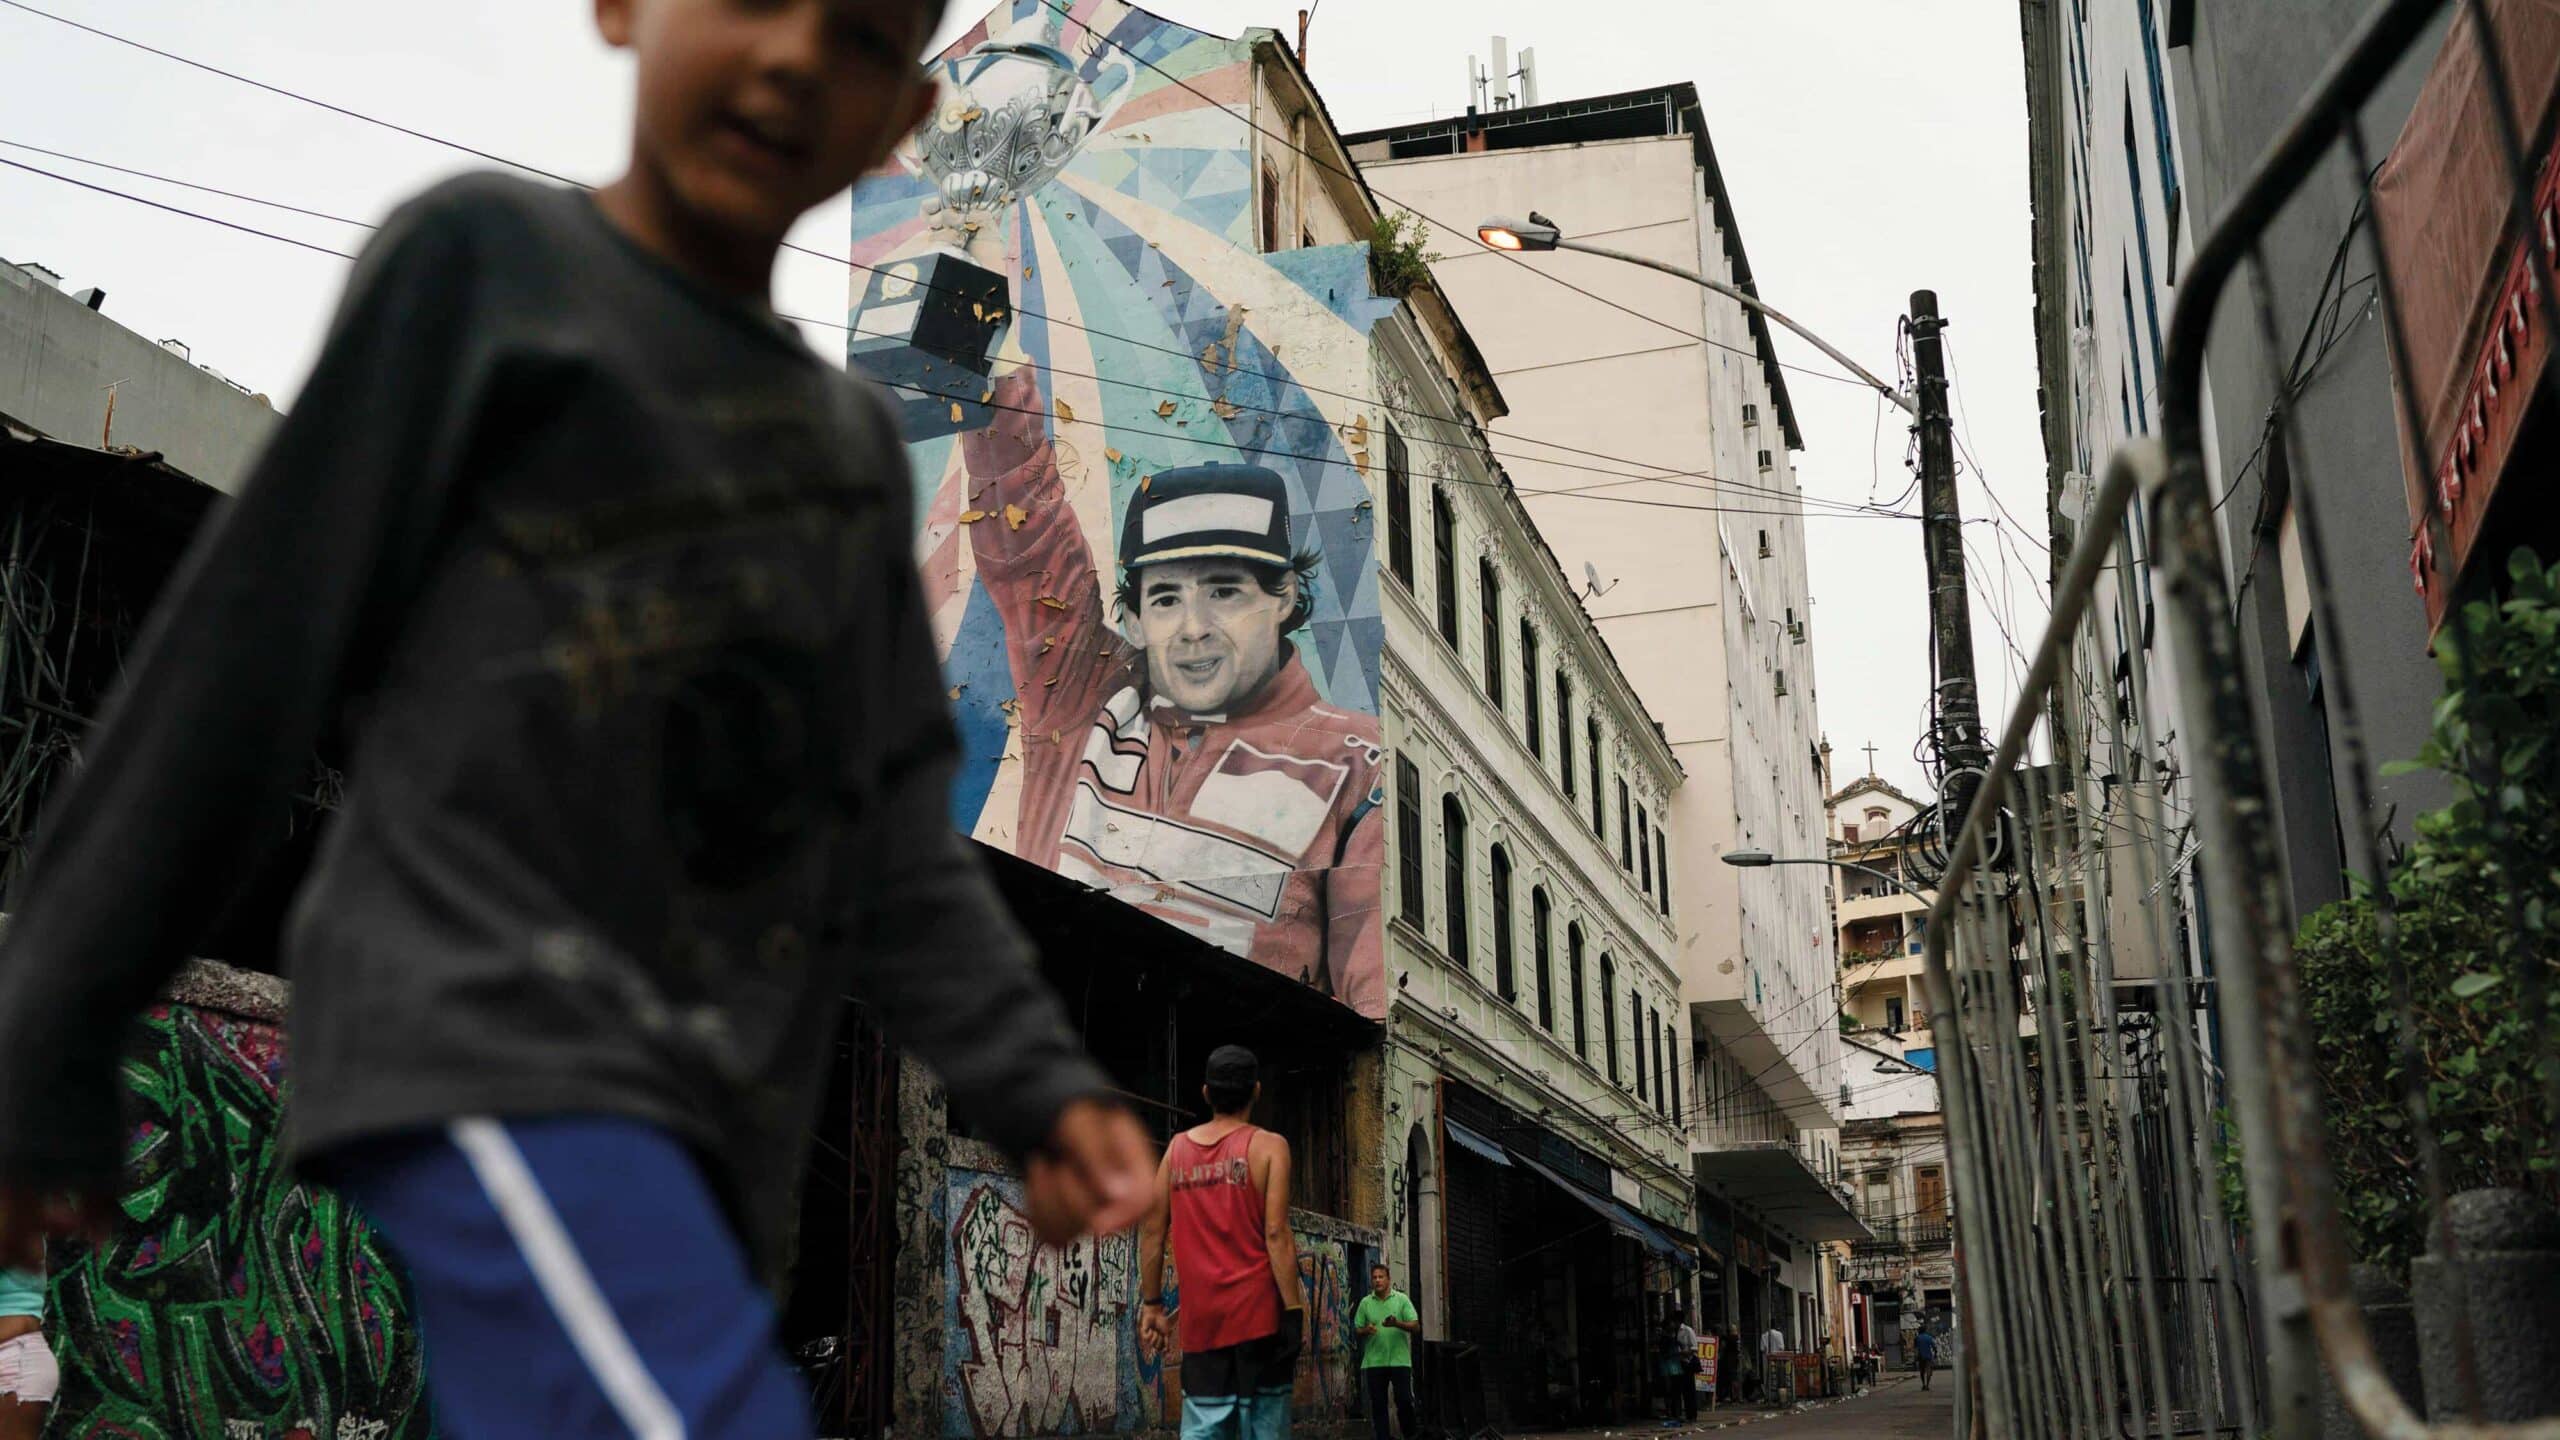 Senna street art in streets of Brazil